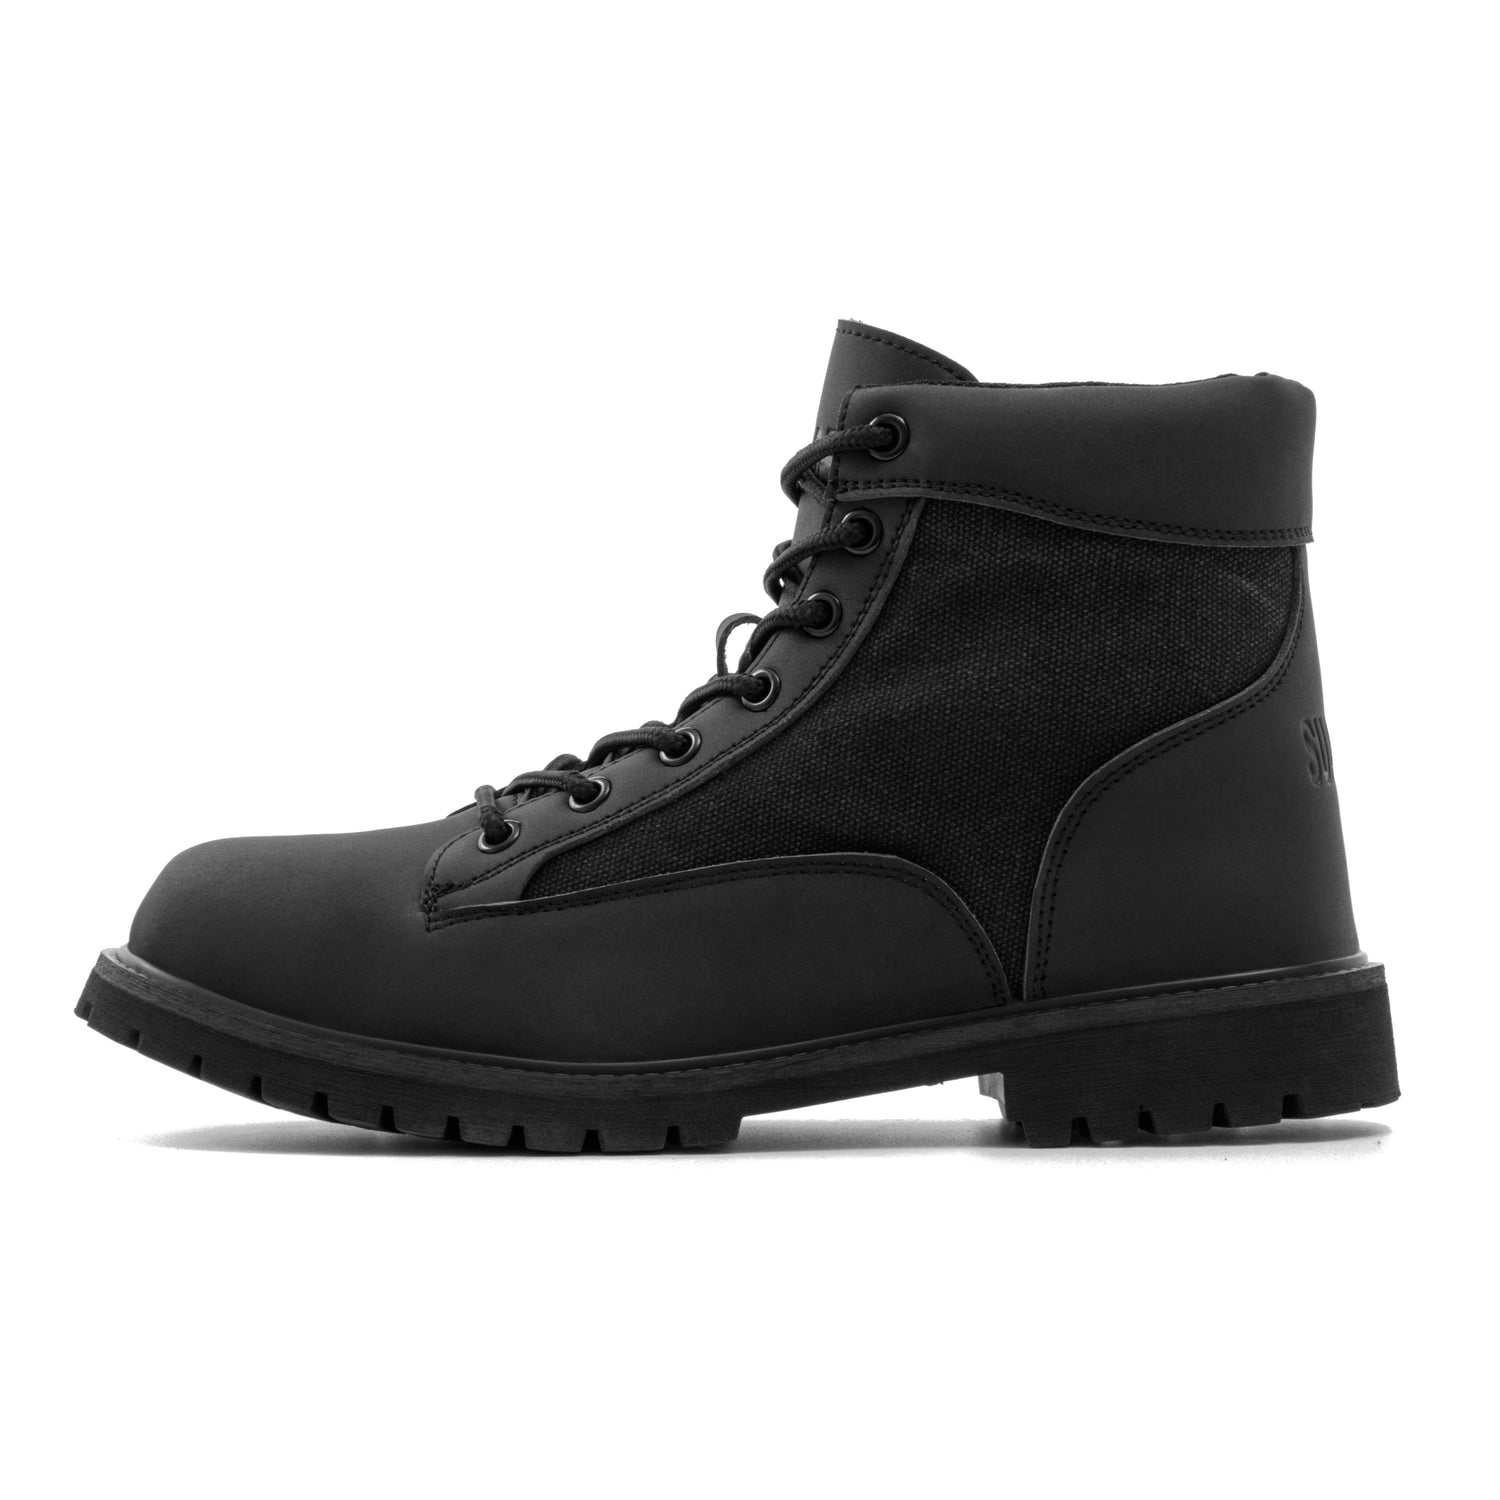 Official Site Suadexshoes.com, Shop Top Safety Shoes For Men and Women ...